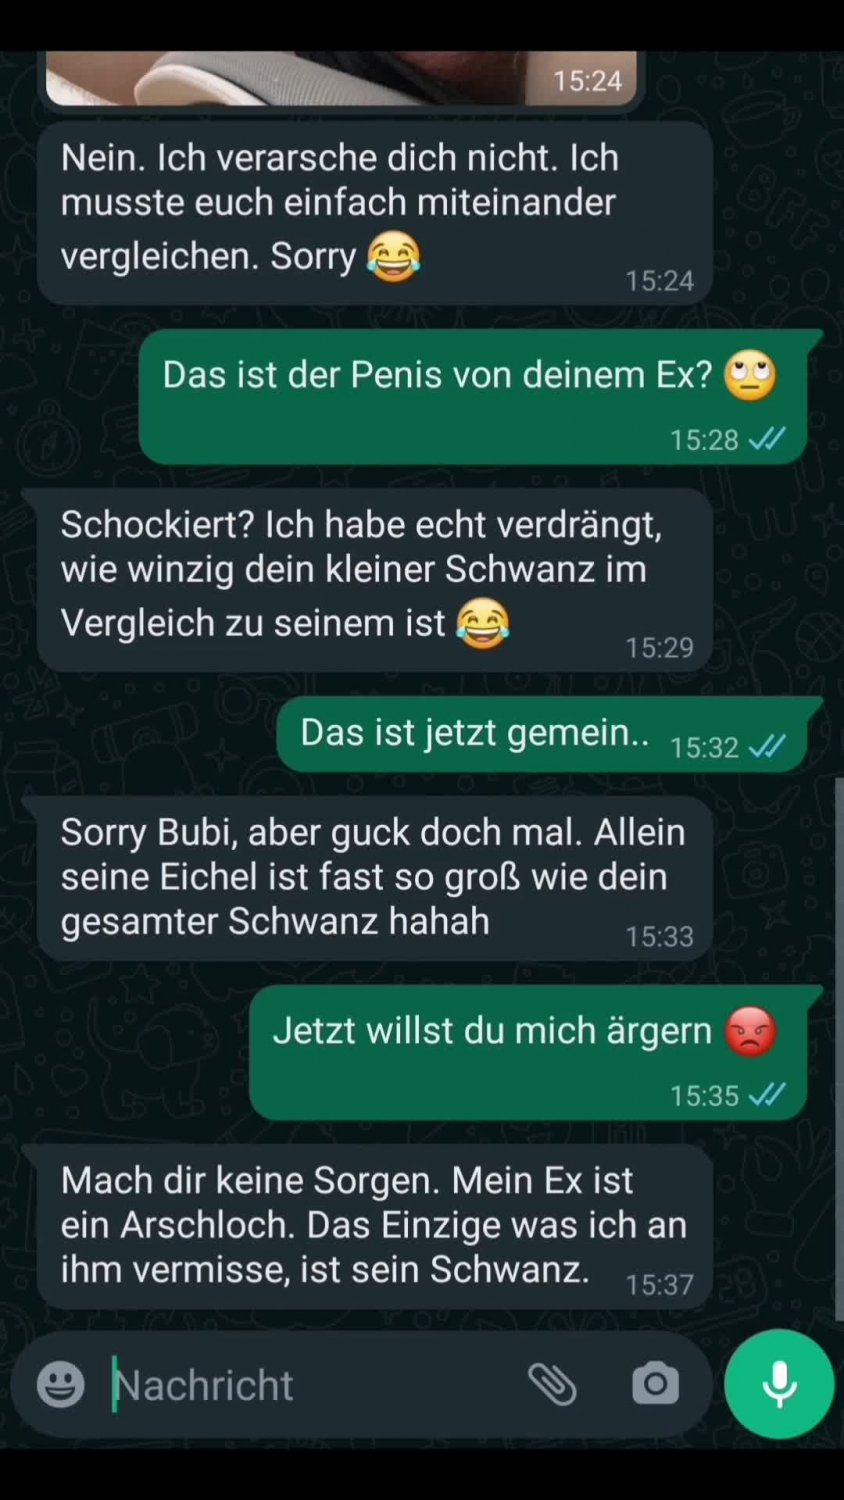 Small penis humiliation WhatsApp Chat (German) image